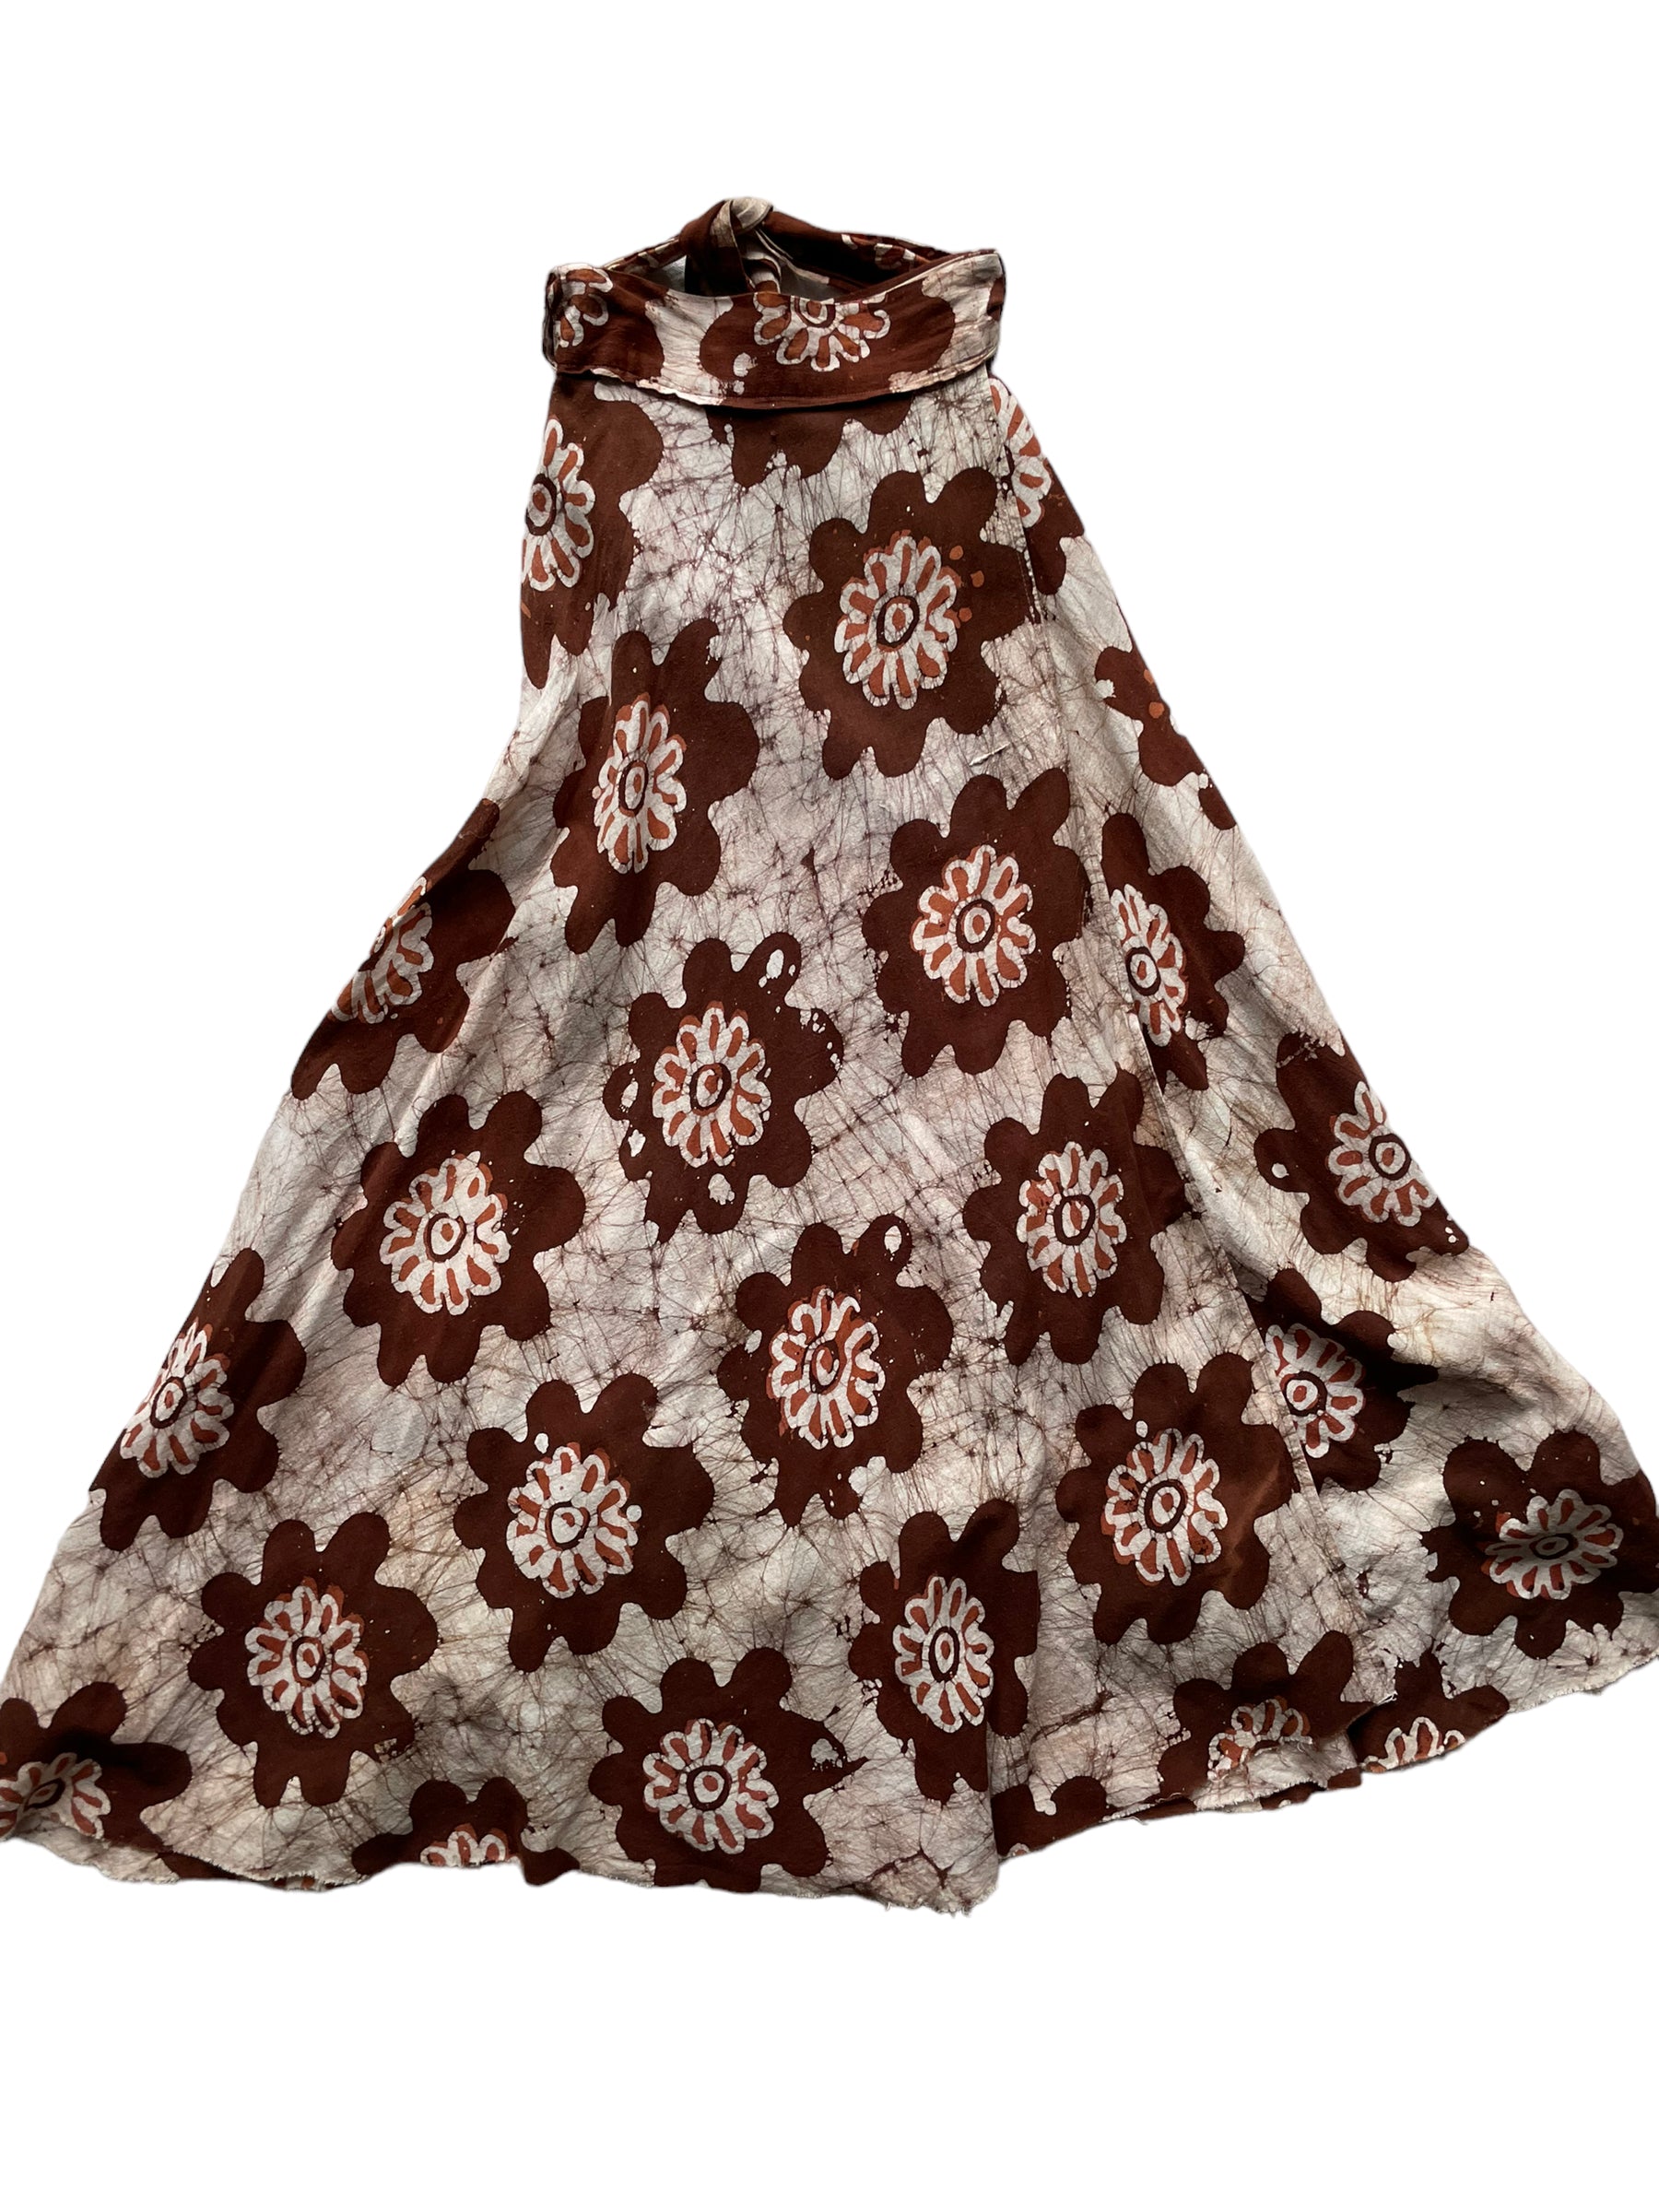 Full back view of Vintage 1970s Indian Cotton Batik Wrap Skirt